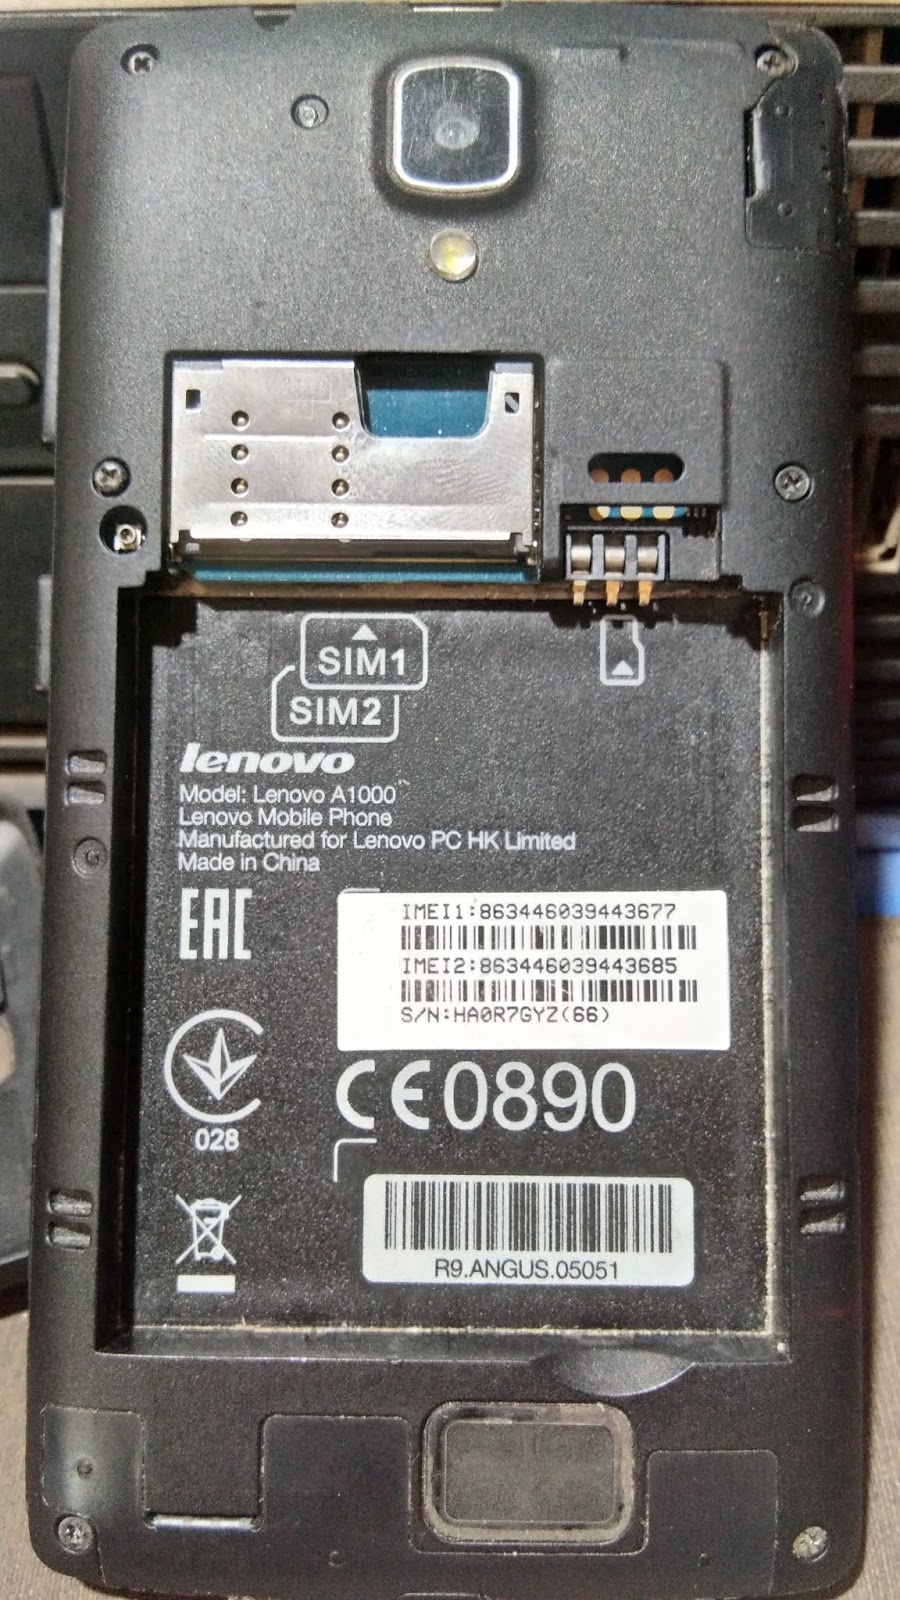 Lenovo A1000 SPD 7731 v5.0 Tested Pac Flash File Free 100% Ok - Javed ...